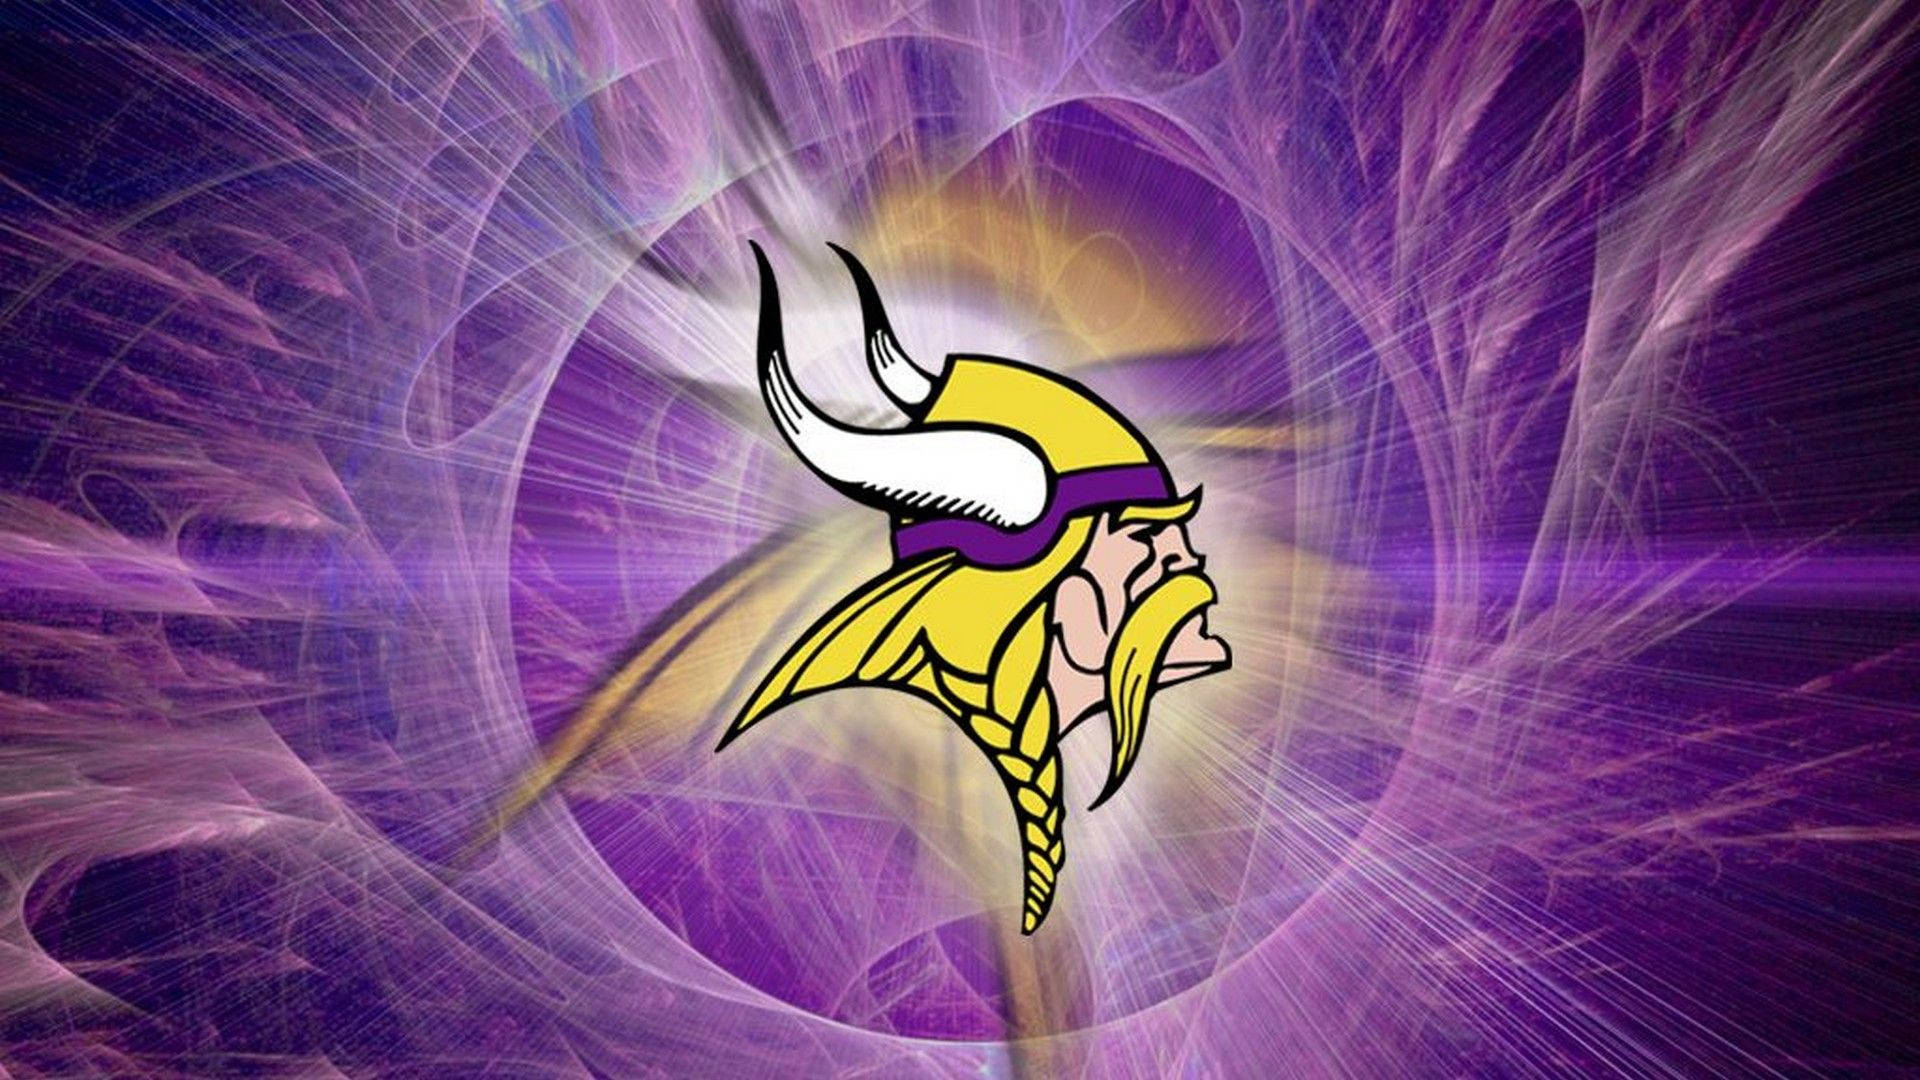 Download Illuminated Minnesota Vikings Logo Wallpaper